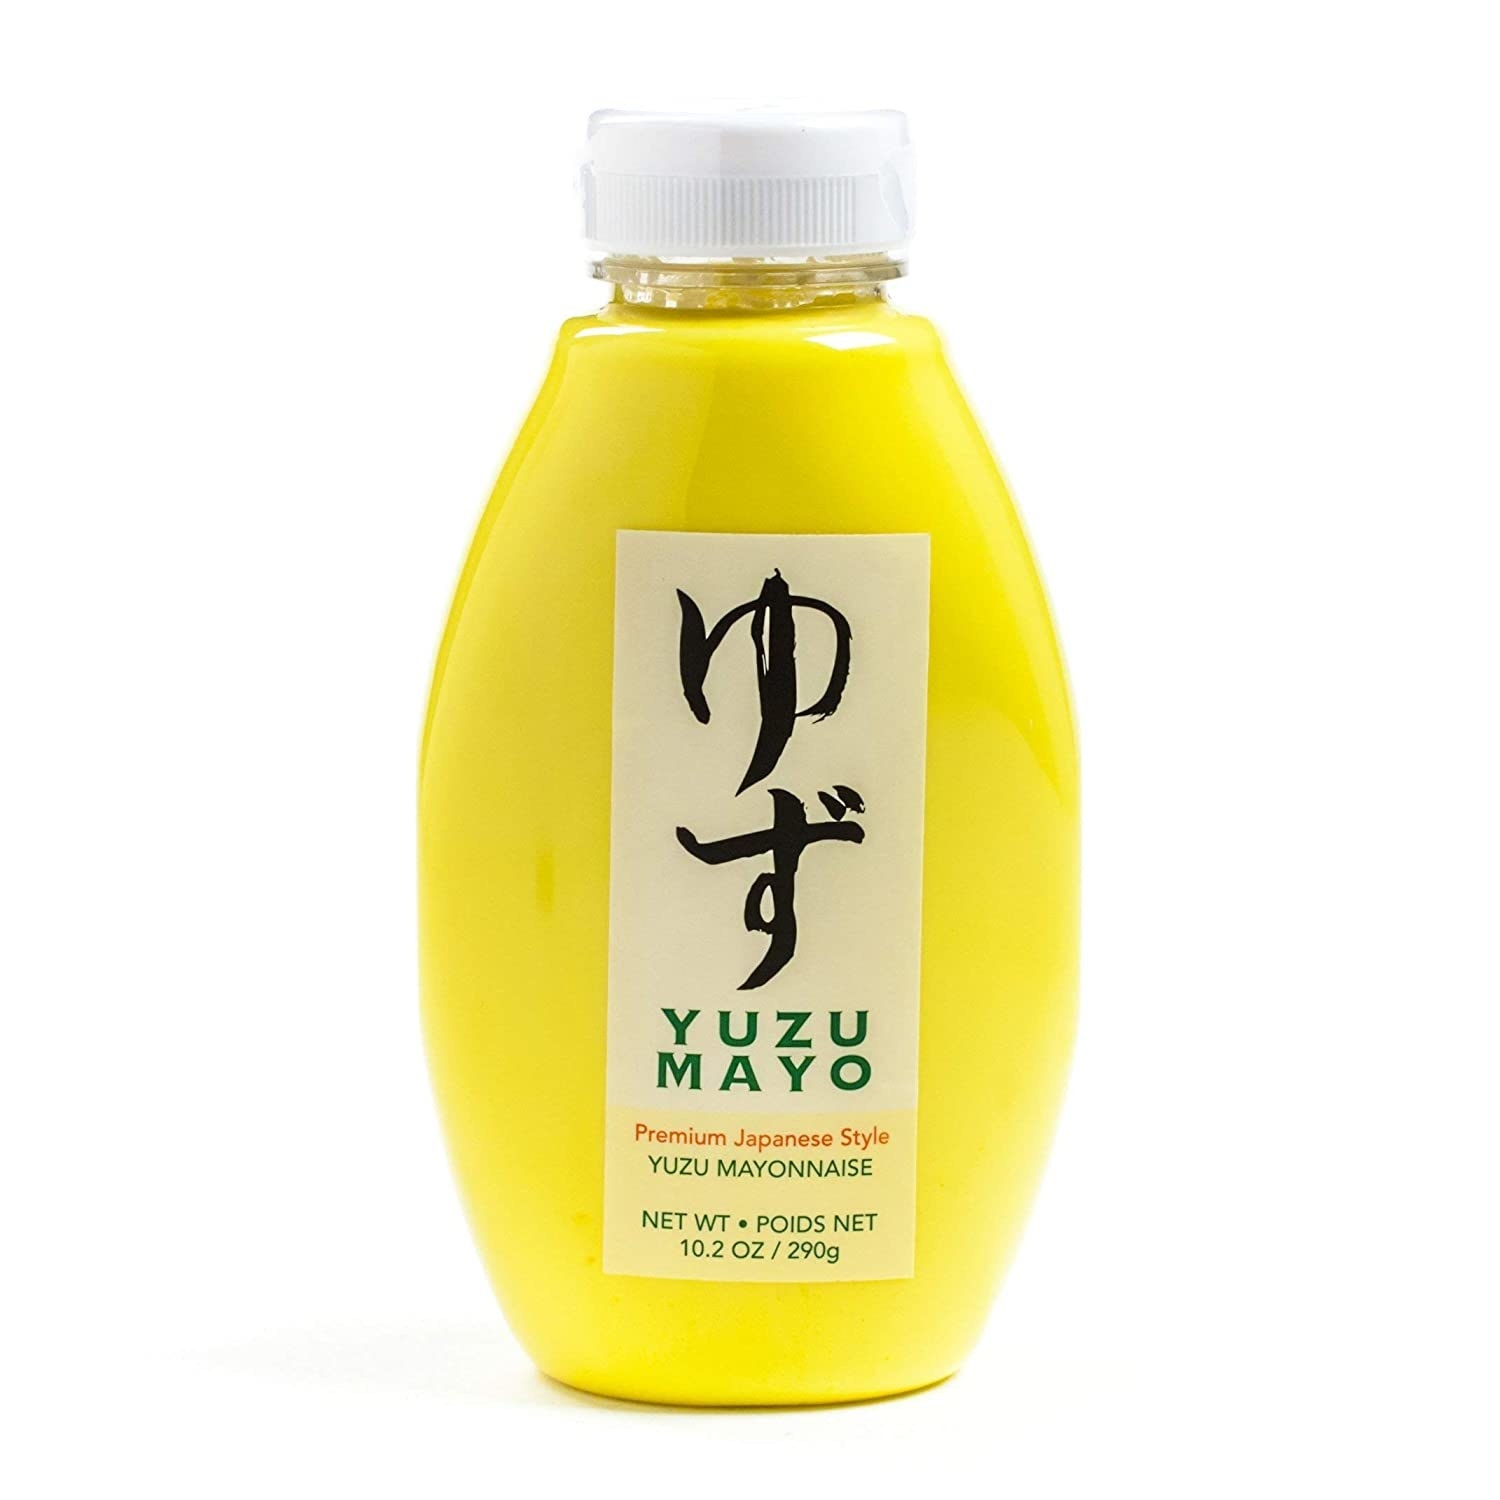 A bottle of yuzu mayonnaise.